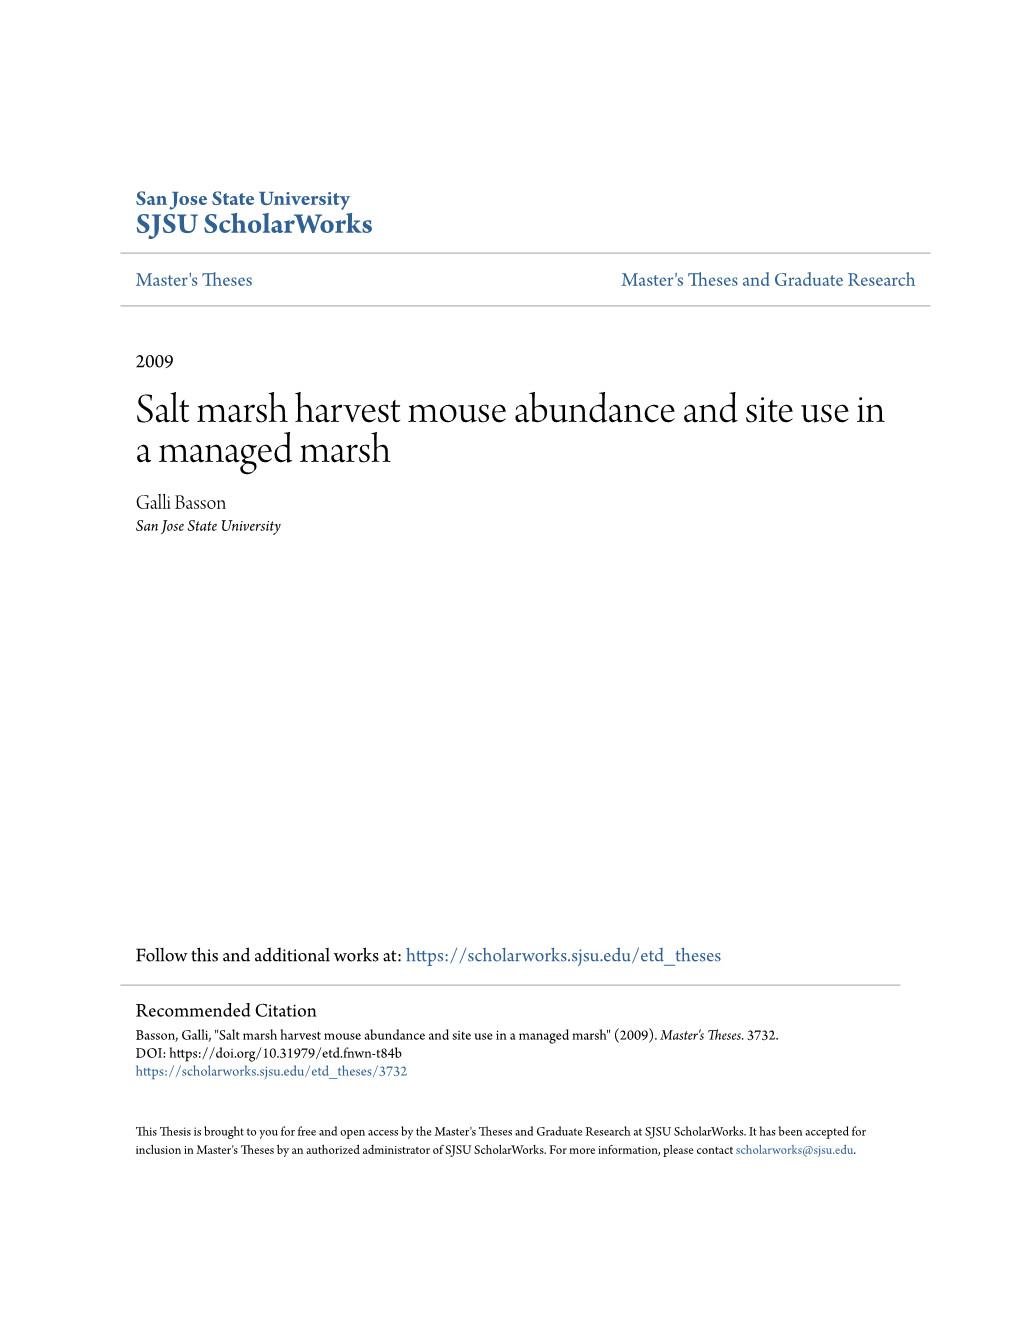 Salt Marsh Harvest Mouse Abundance and Site Use in a Managed Marsh Galli Basson San Jose State University